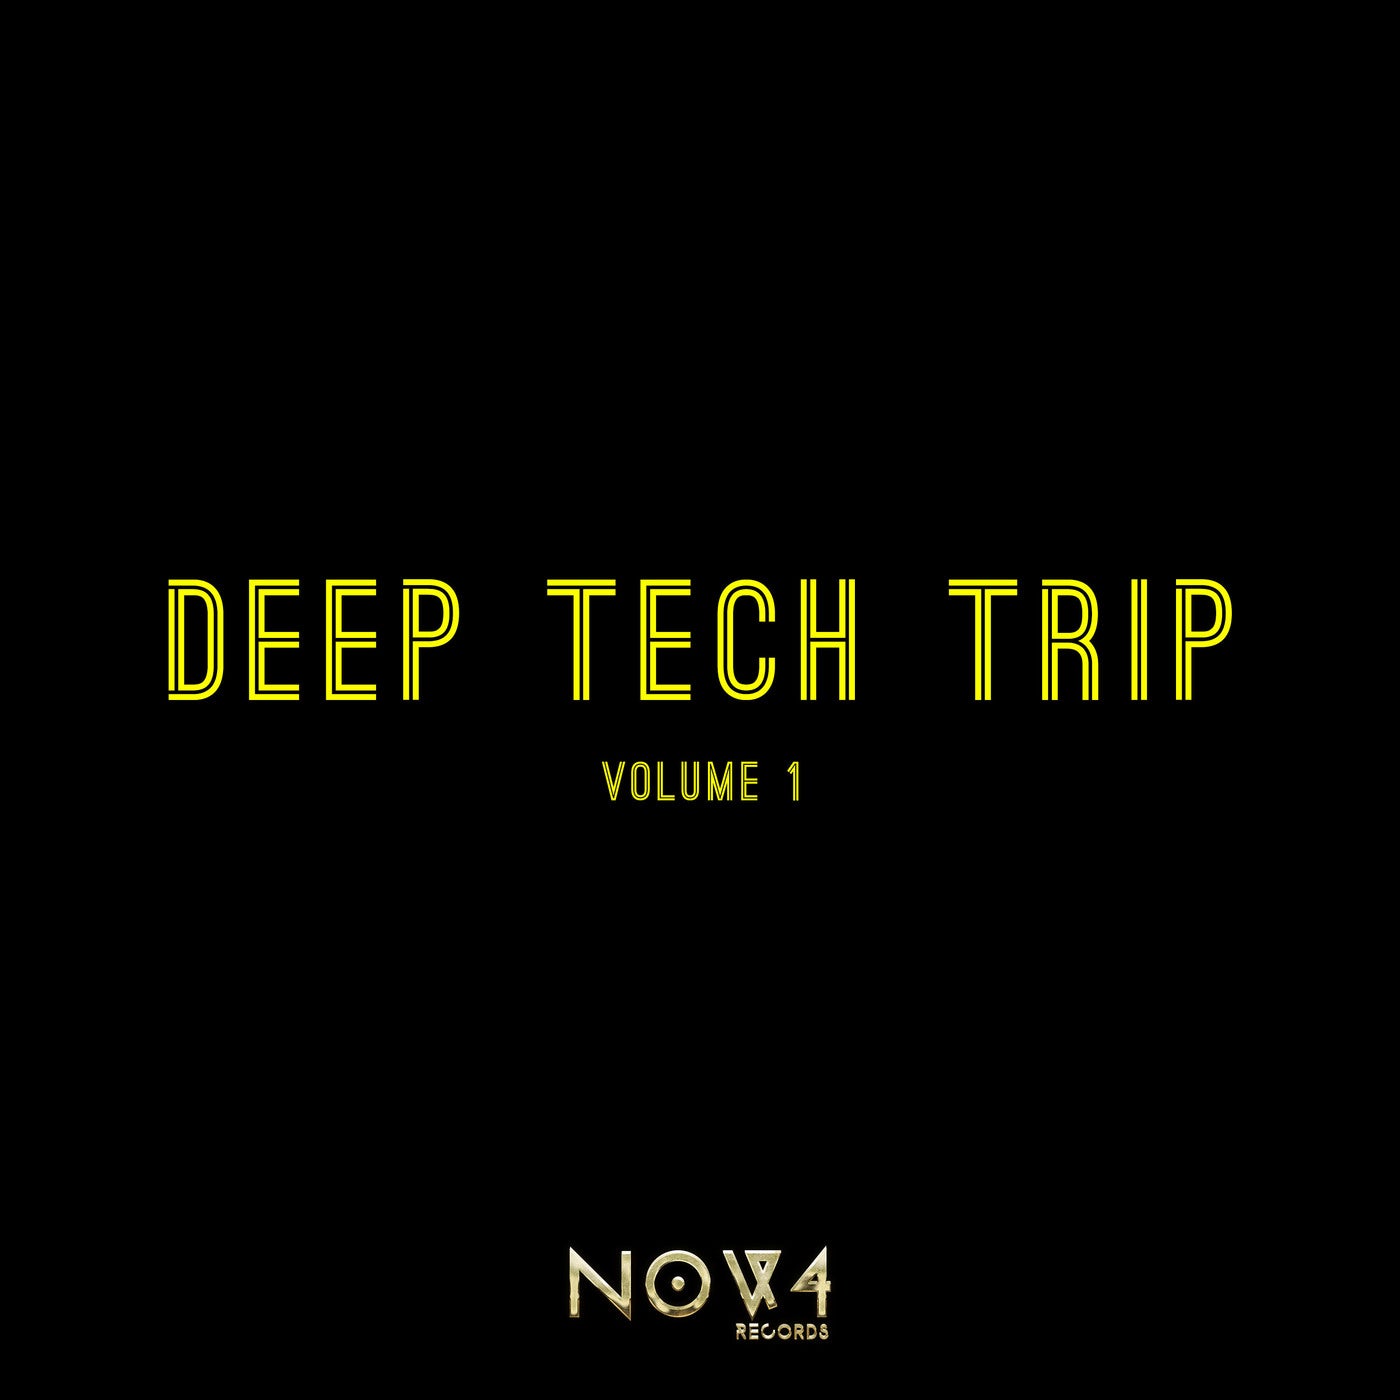 Deep Tech Trip, Vol. 1